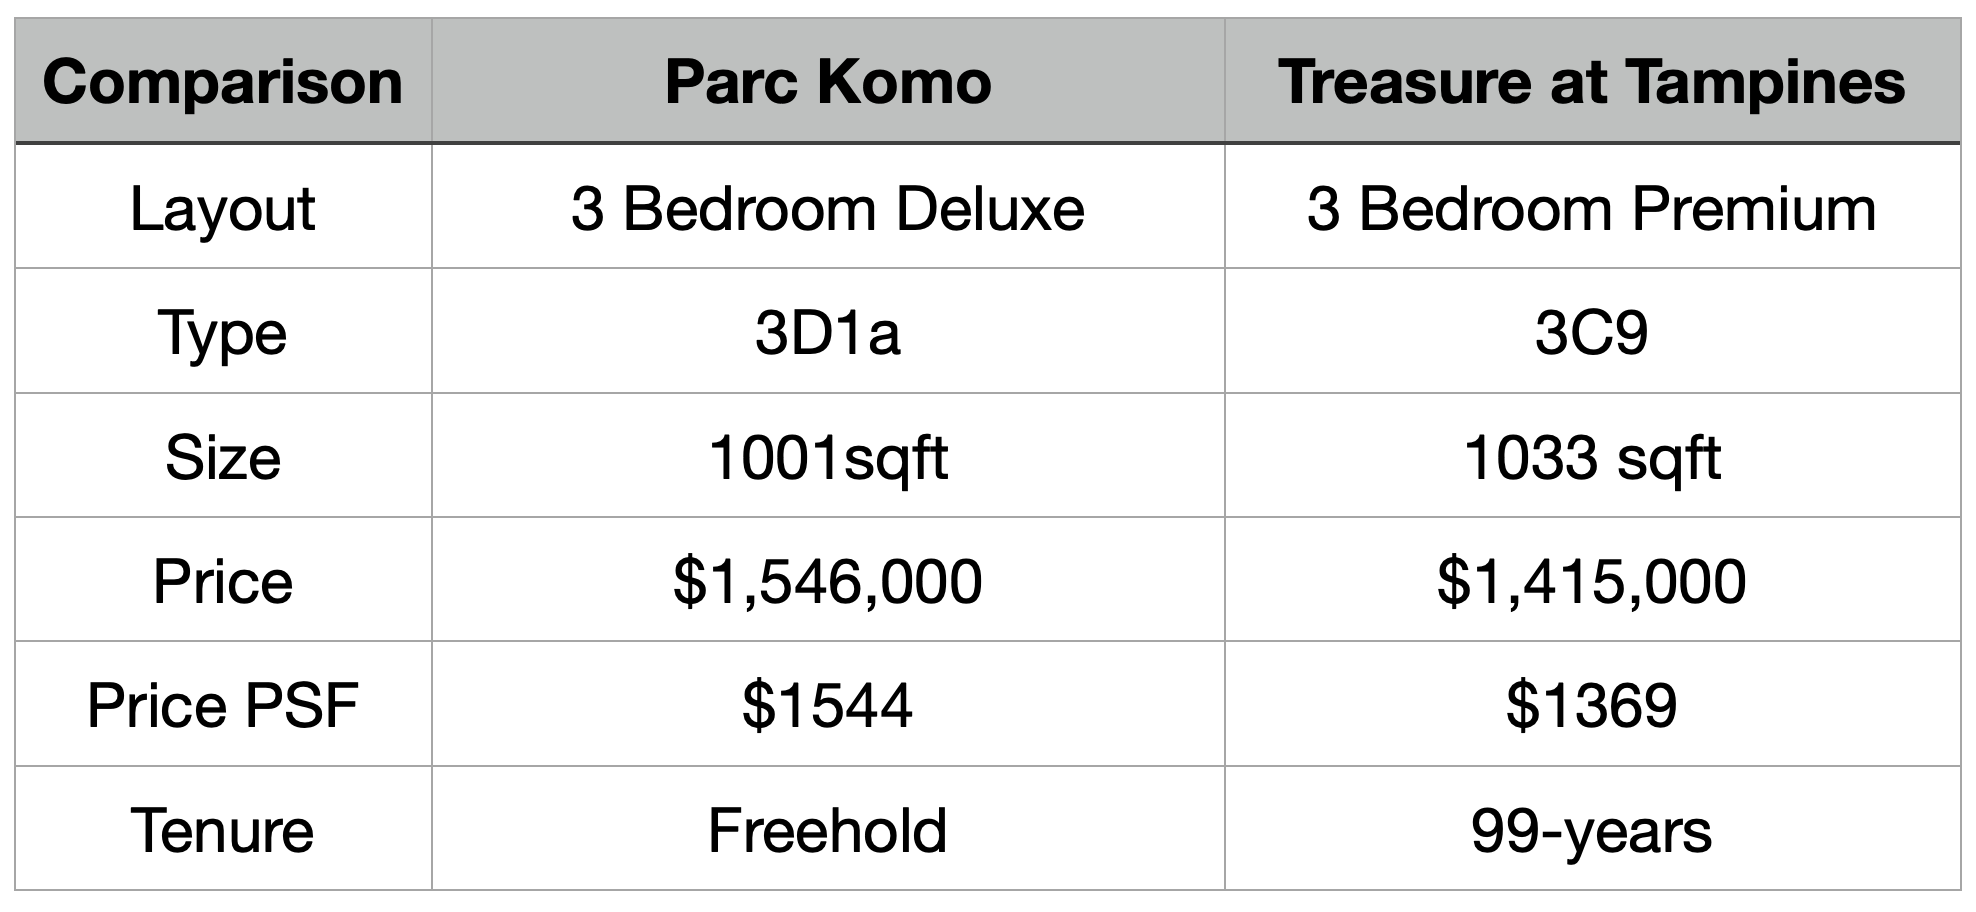 Treasure at Tampines vs Parc Komo 3-bedroom comparison.png